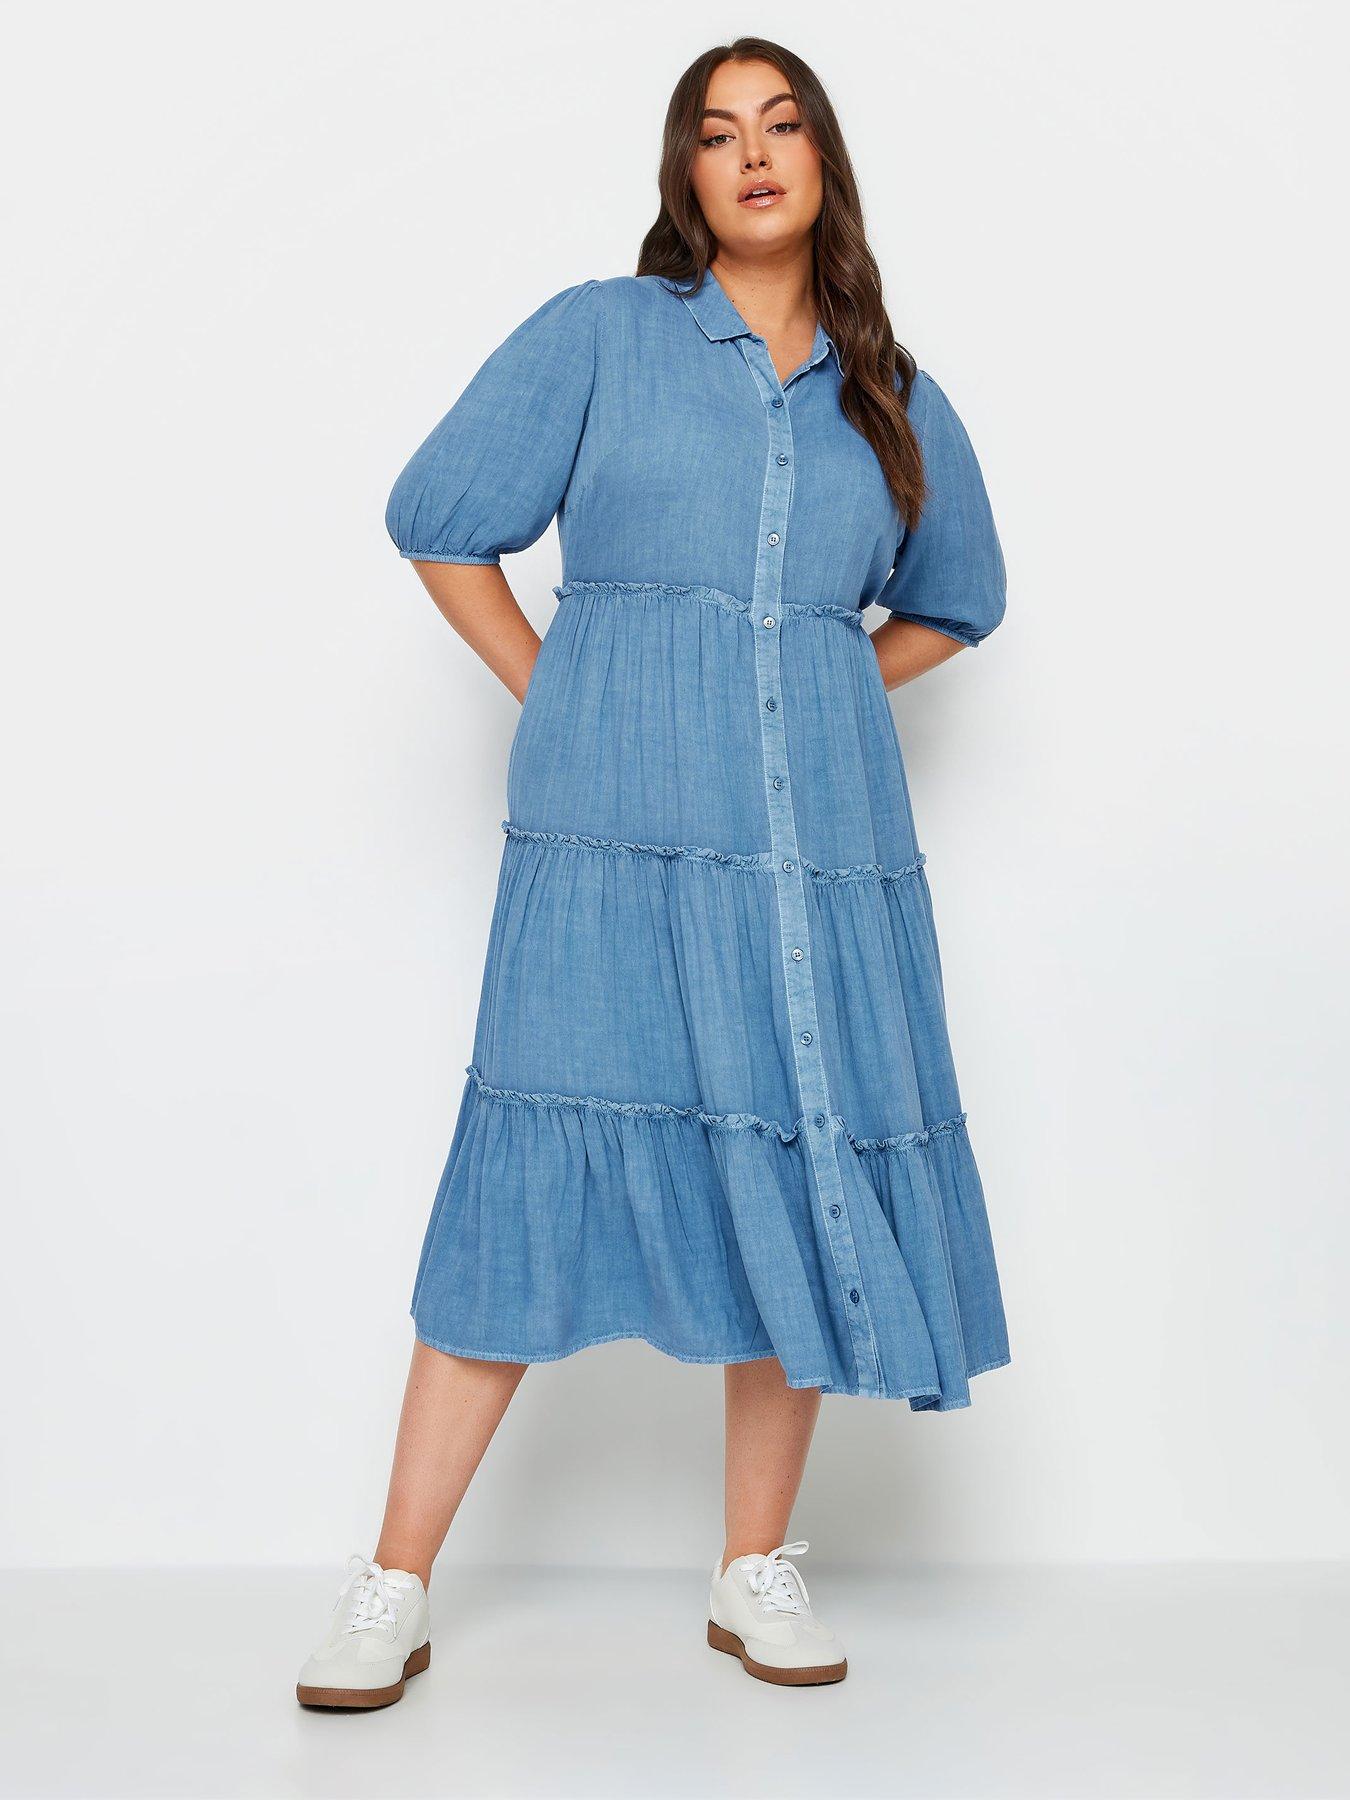 Plus Size Women Long Sleeve Button Down Shirt Dress Ladies Work Tunic Maxi  Dress | eBay